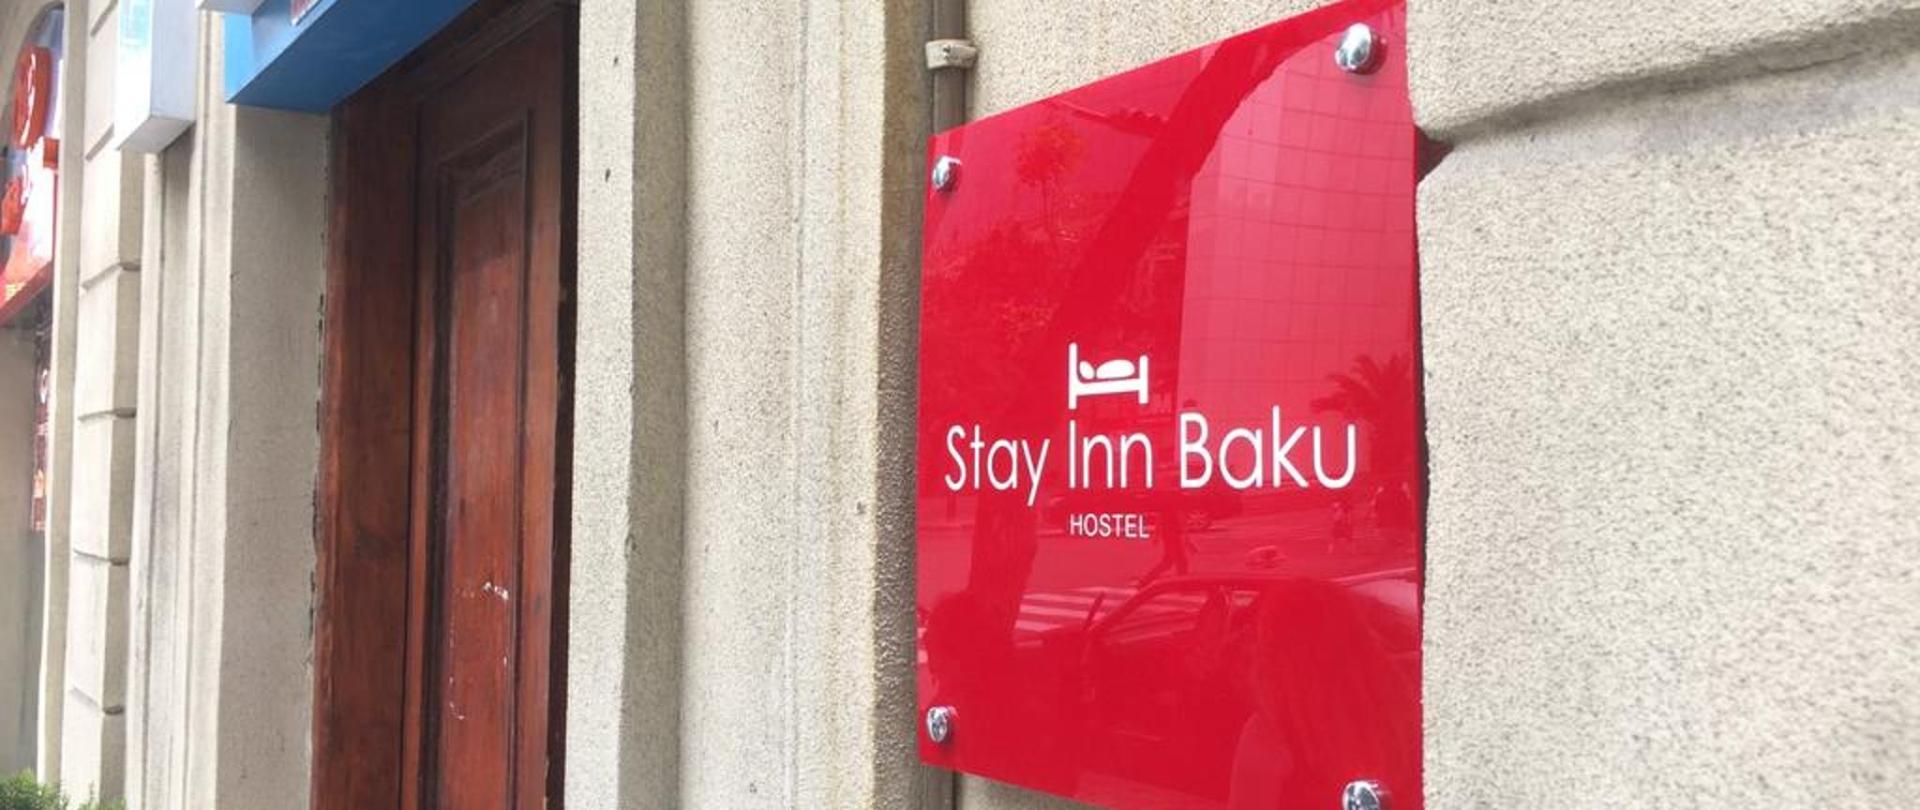 Baku Hostel In City Center Stay Inn Baku Hotel Hostel - 